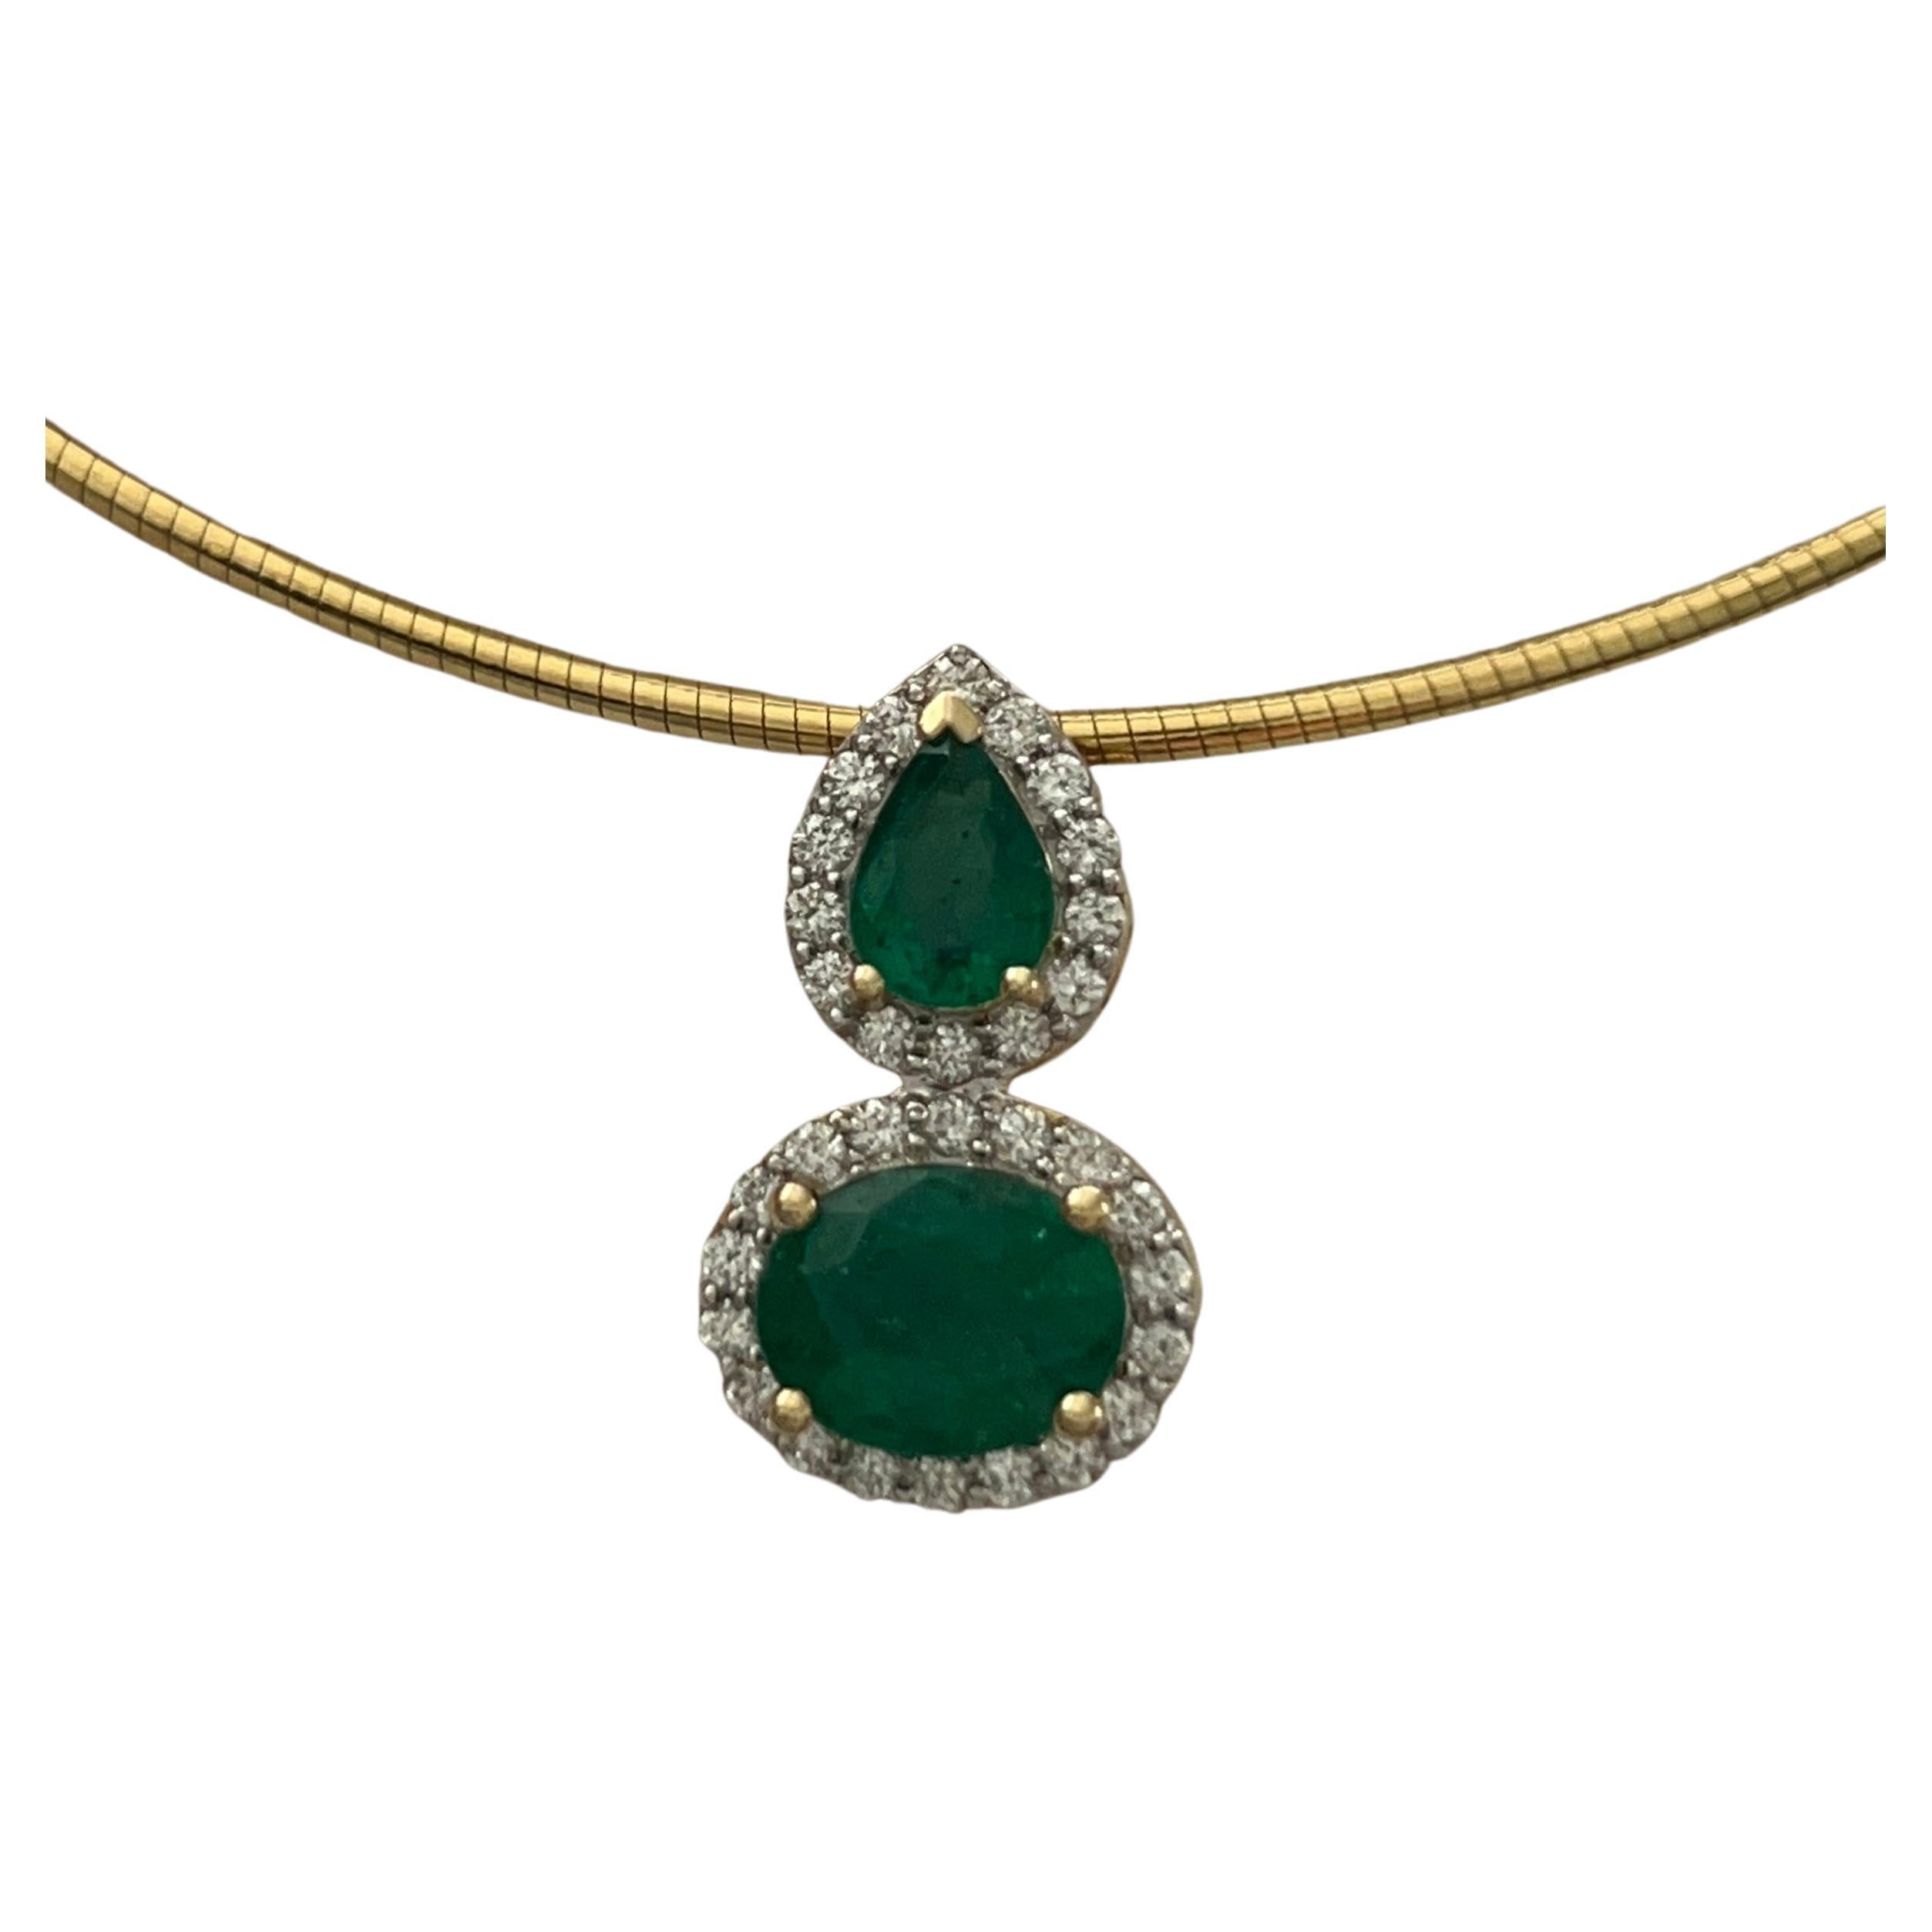 Oval and Pear Shape Emerald Pendant with Diamond Halo on Omega Chain